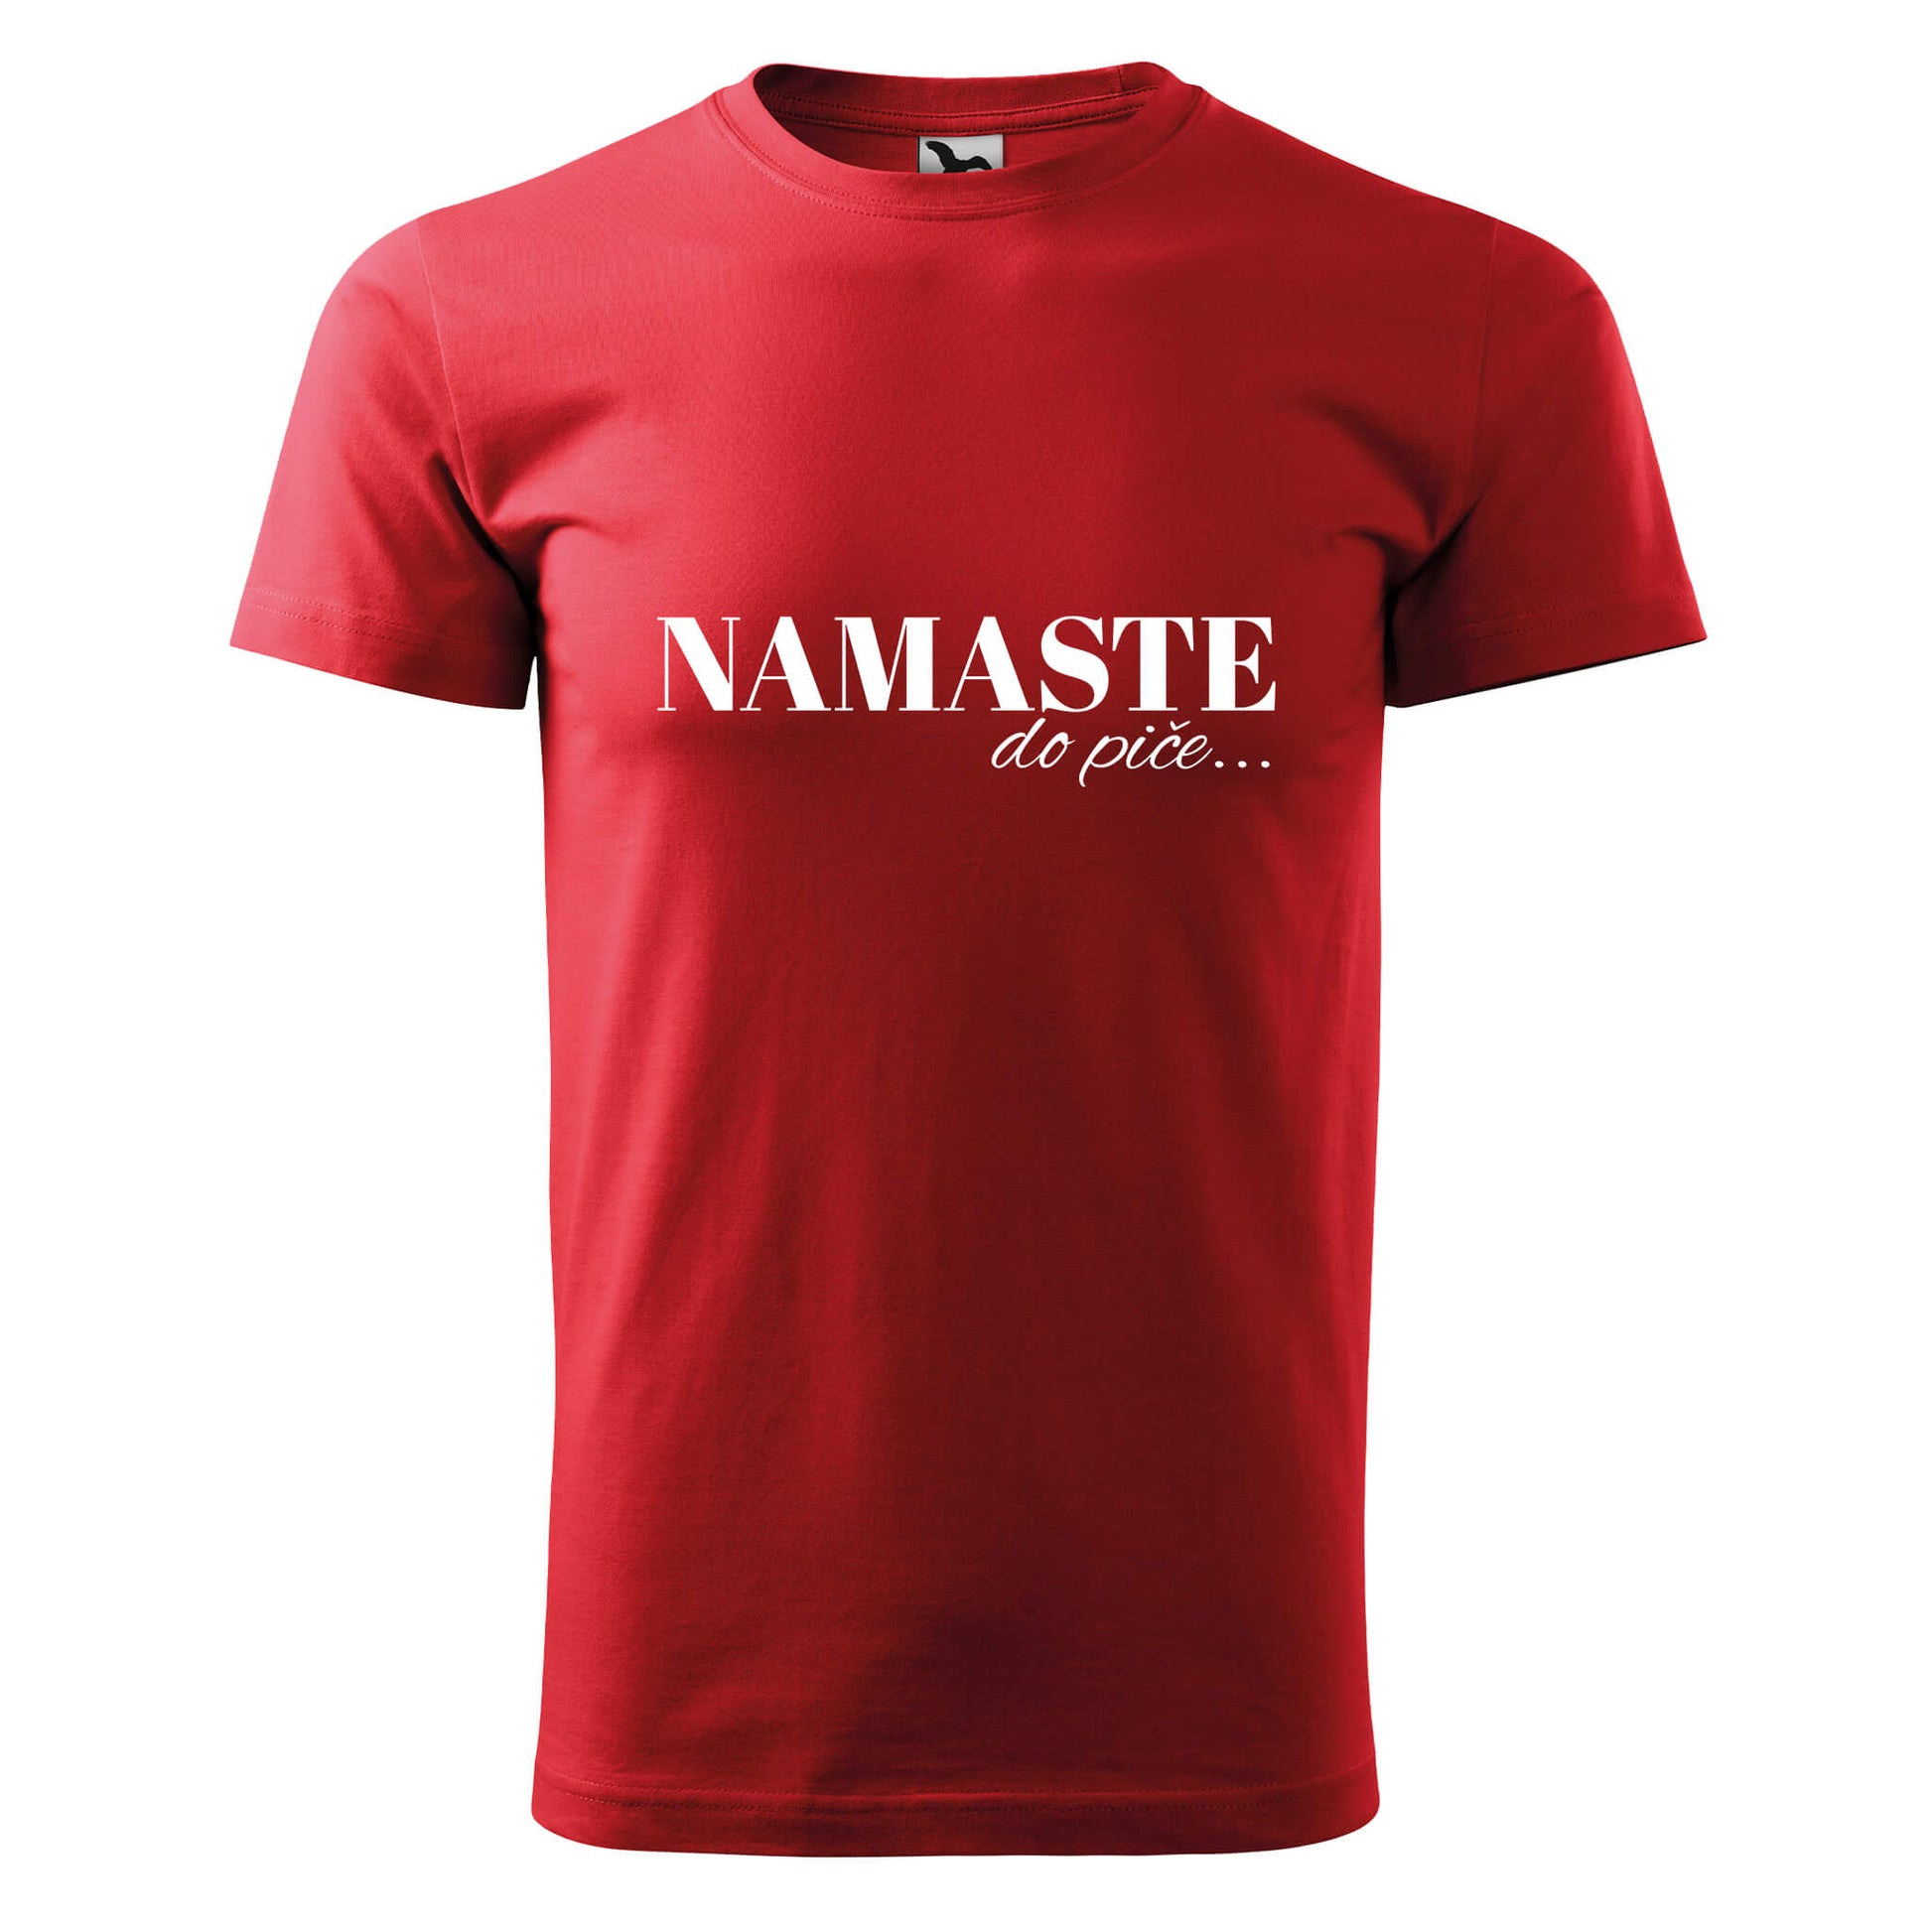 Namaste do pice t-shirt - rvdesignprint